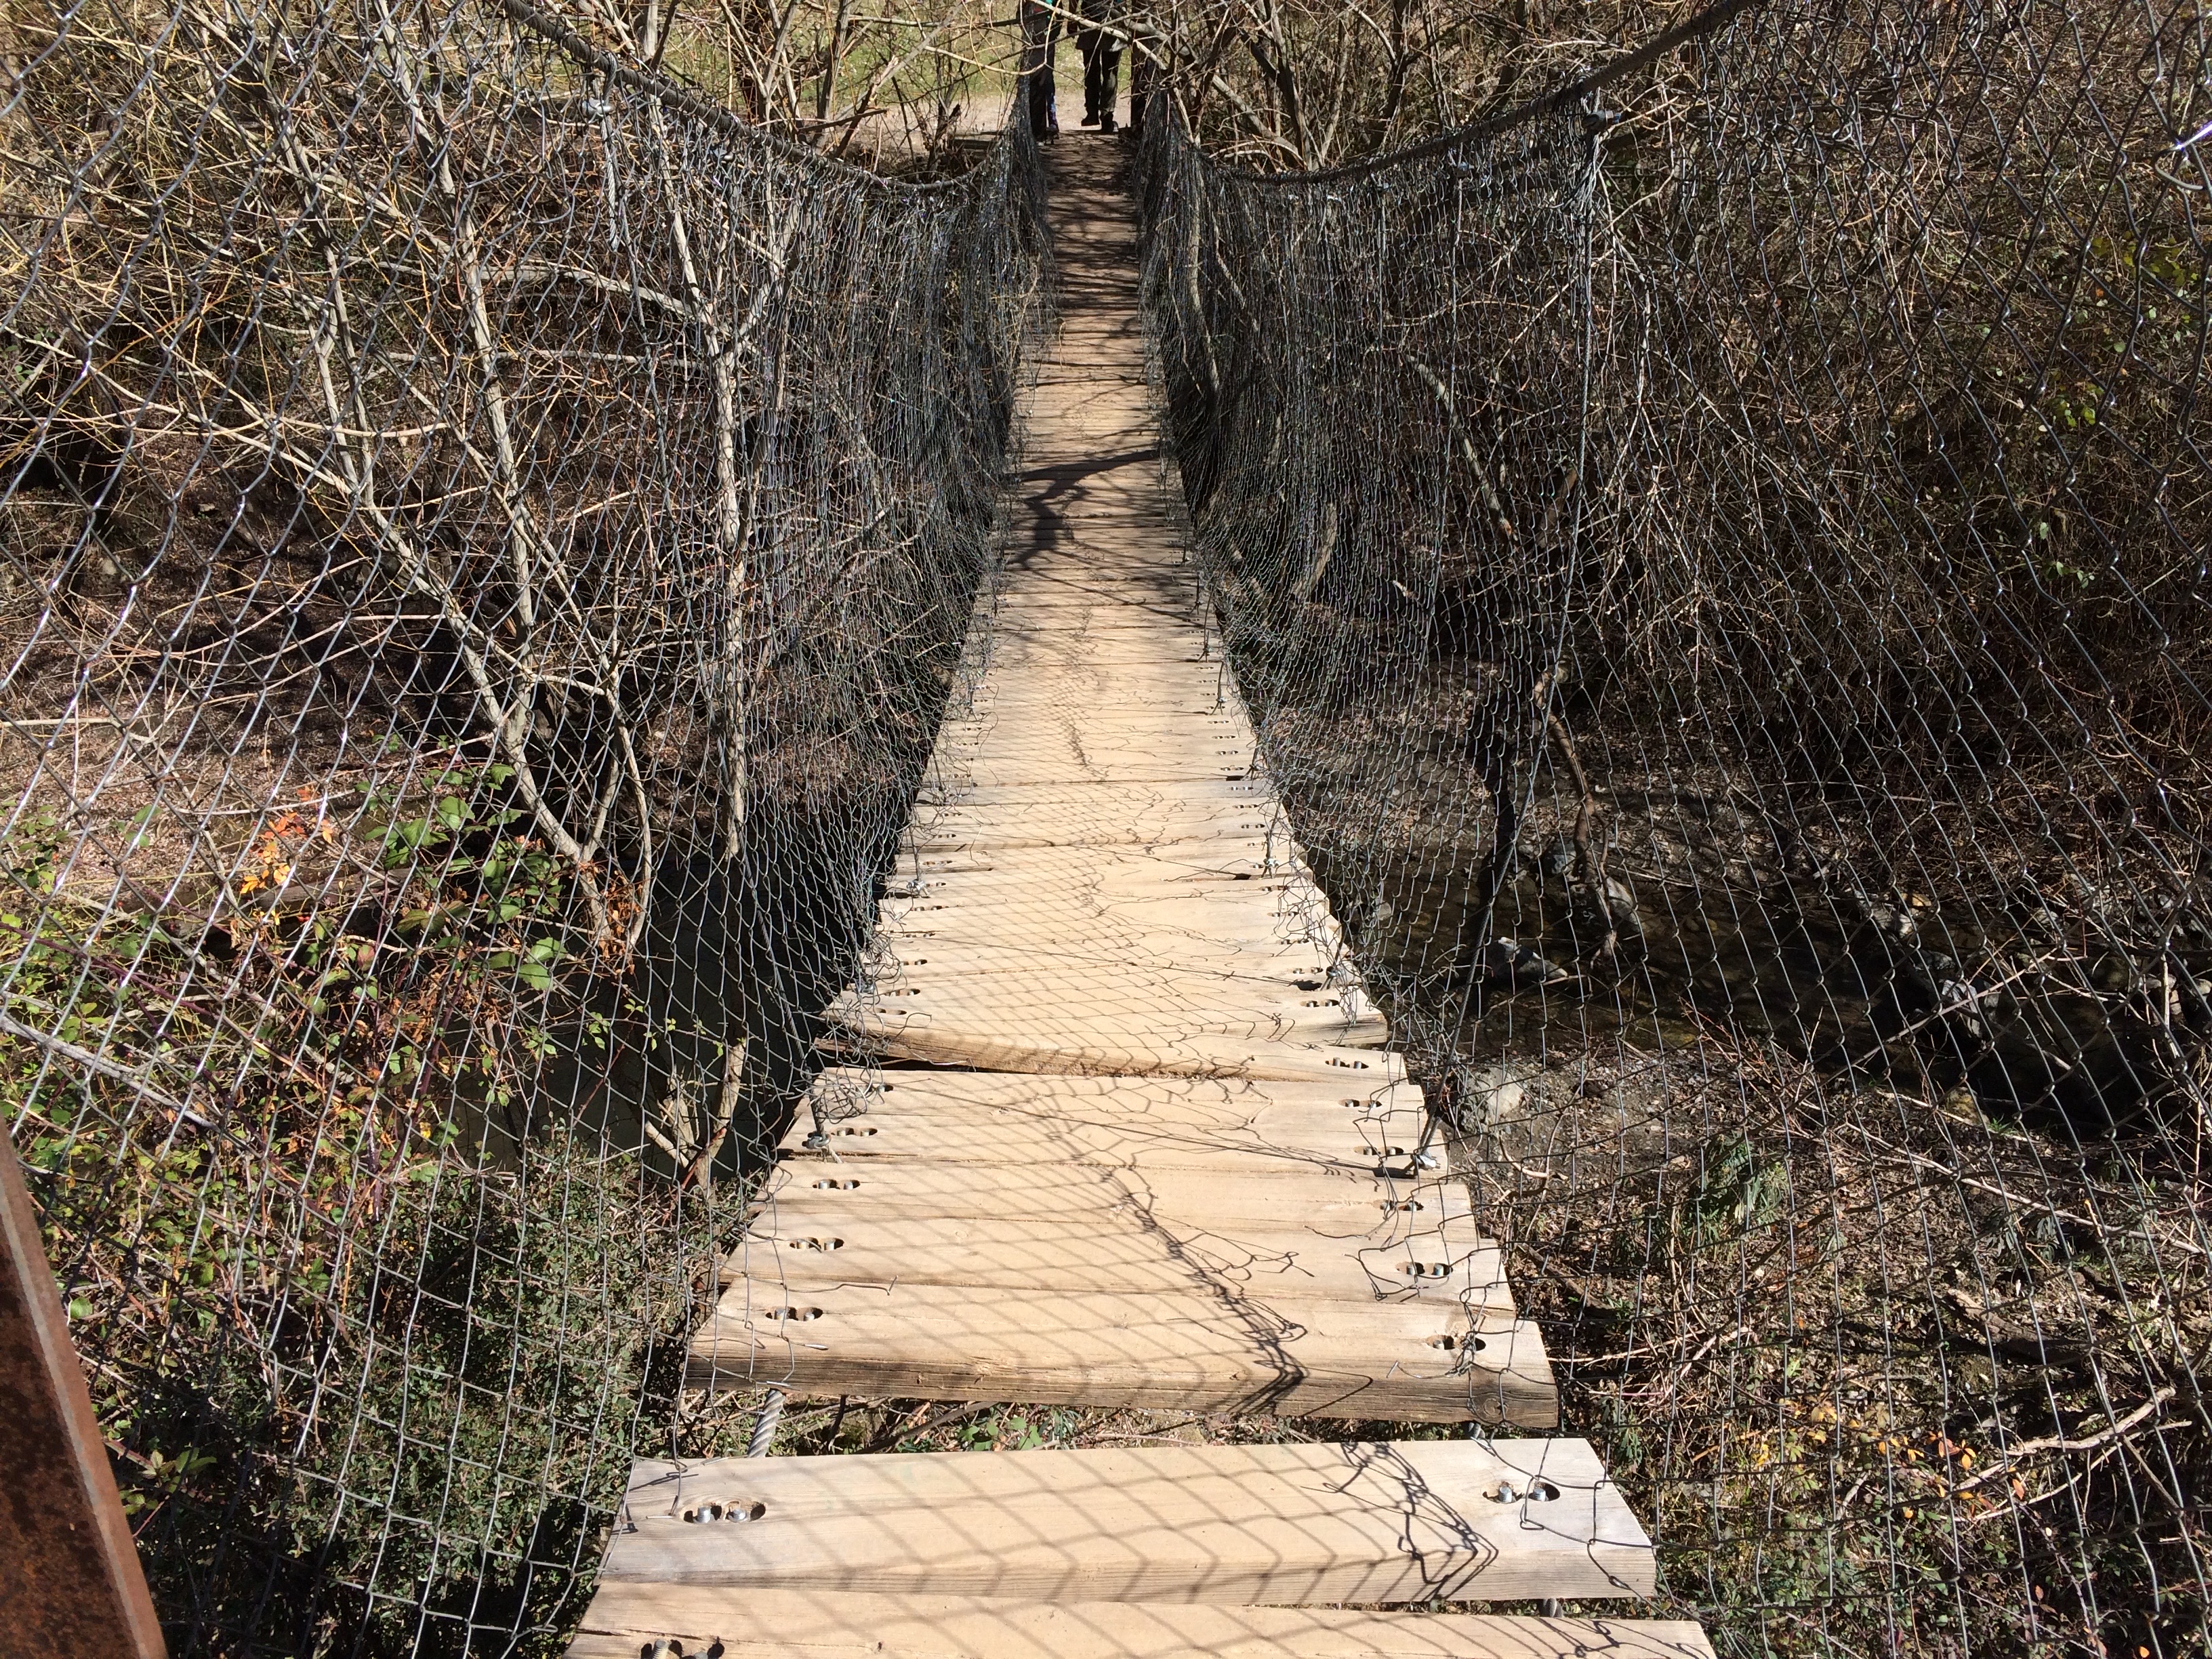 Los Cahorros gorge walk Monachil Fourth Hanging Bridge